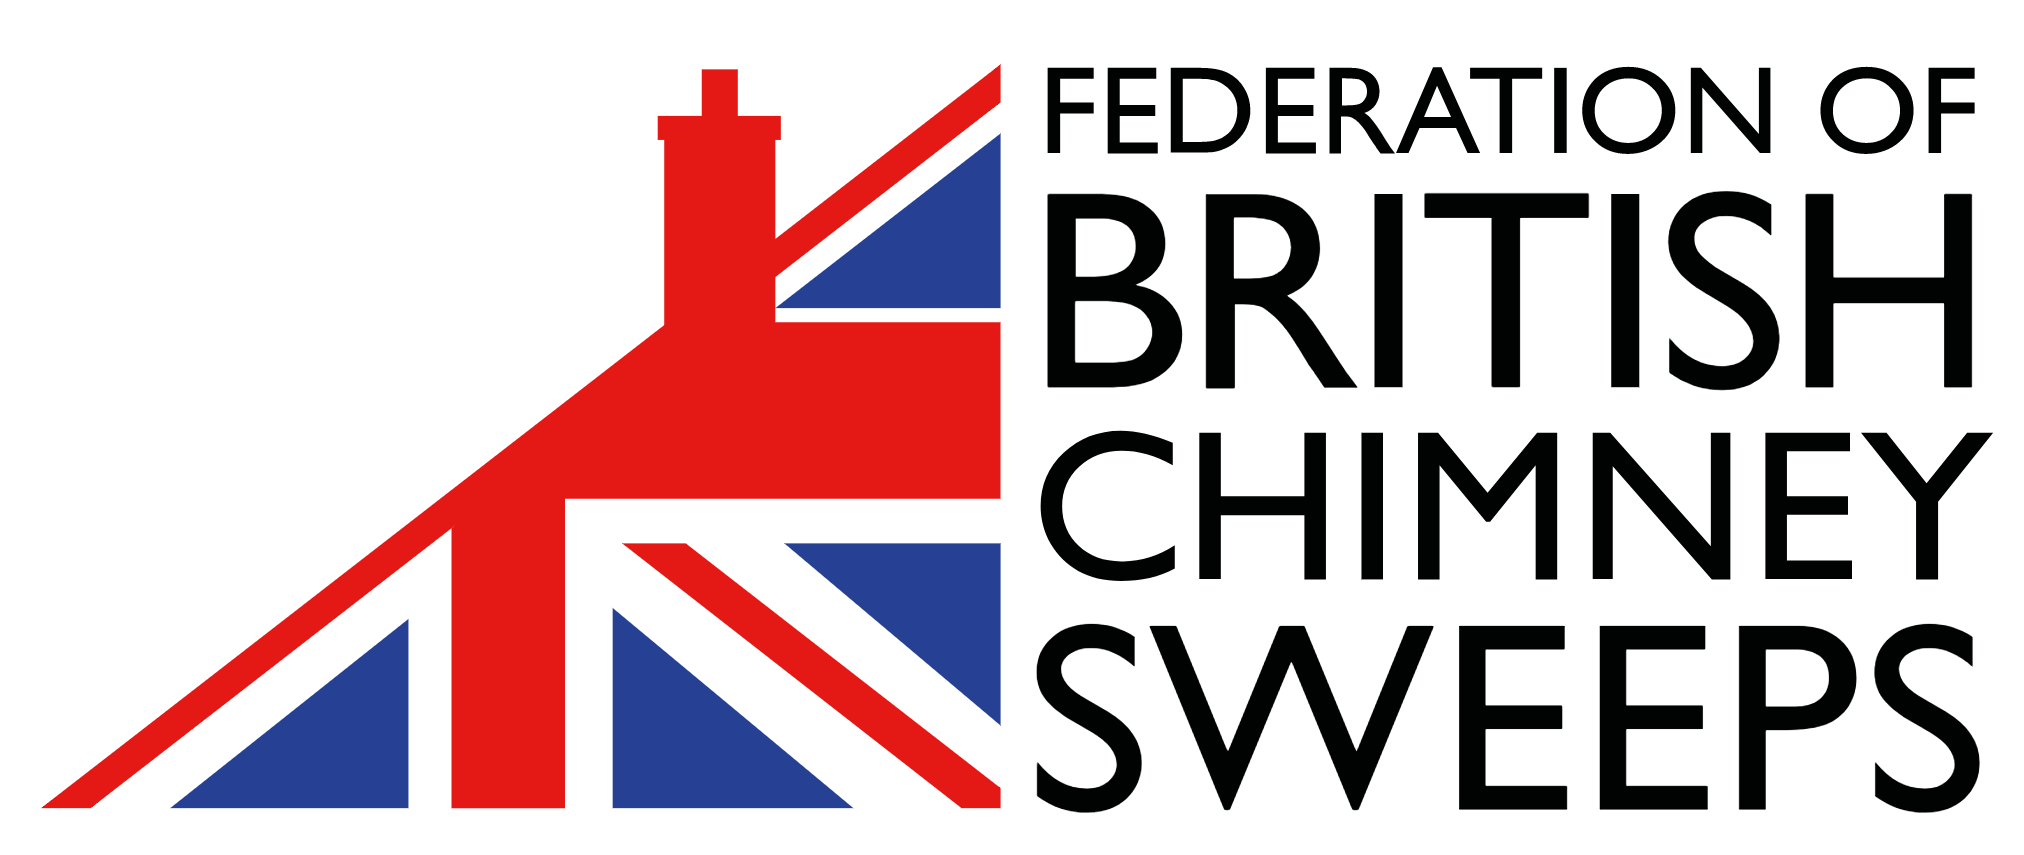 Federation of Britain Chimney Sweeps logo